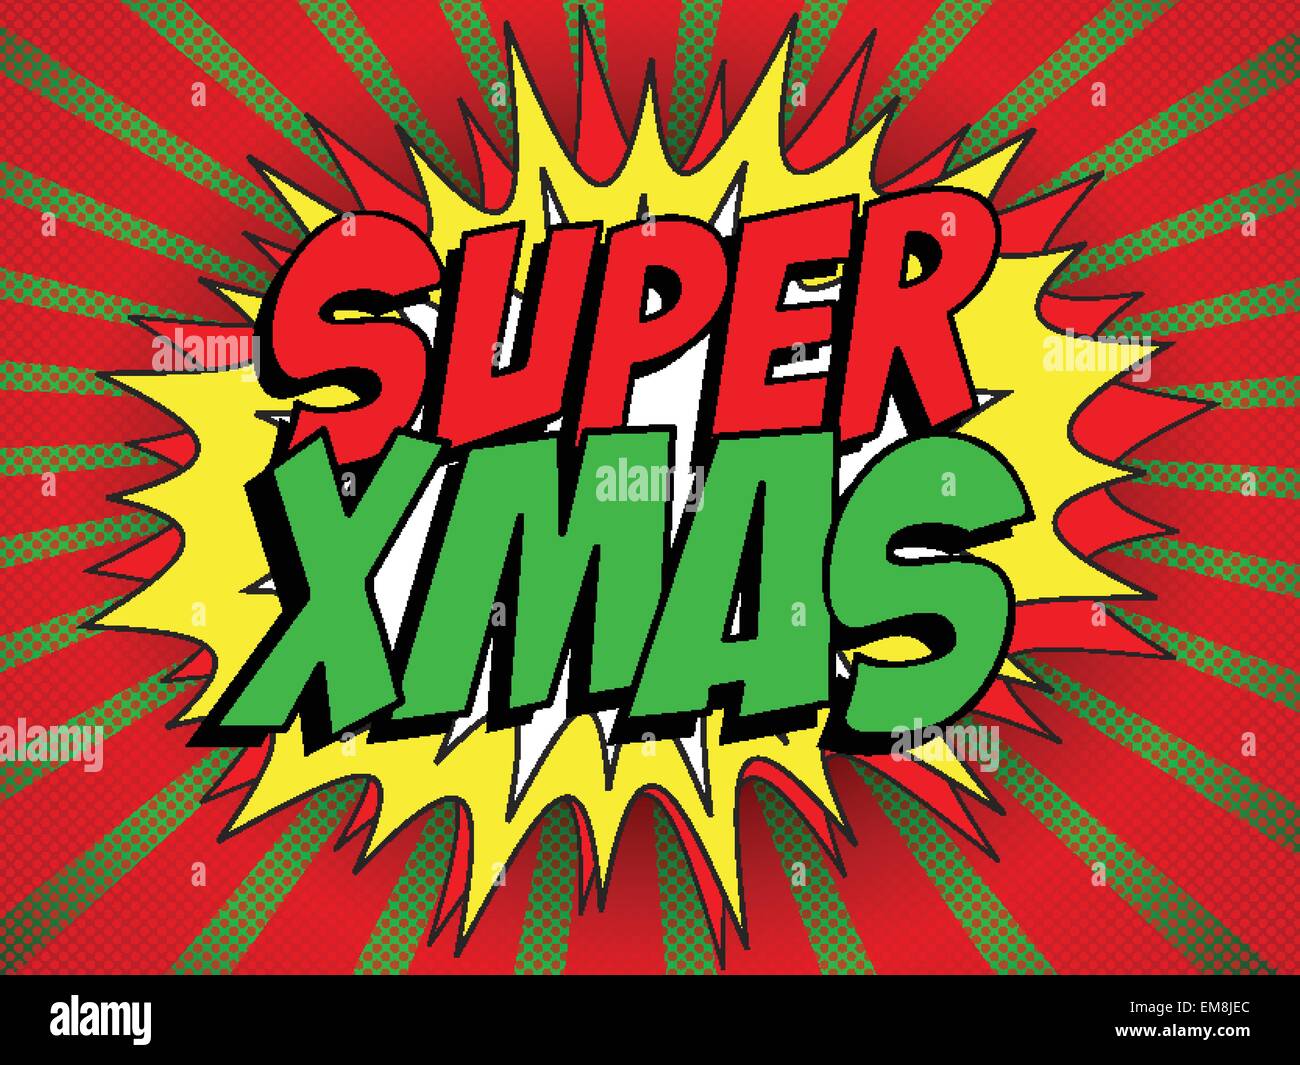 Merry Christmas Super Hero Background Stock Vector Image & Art - Alamy